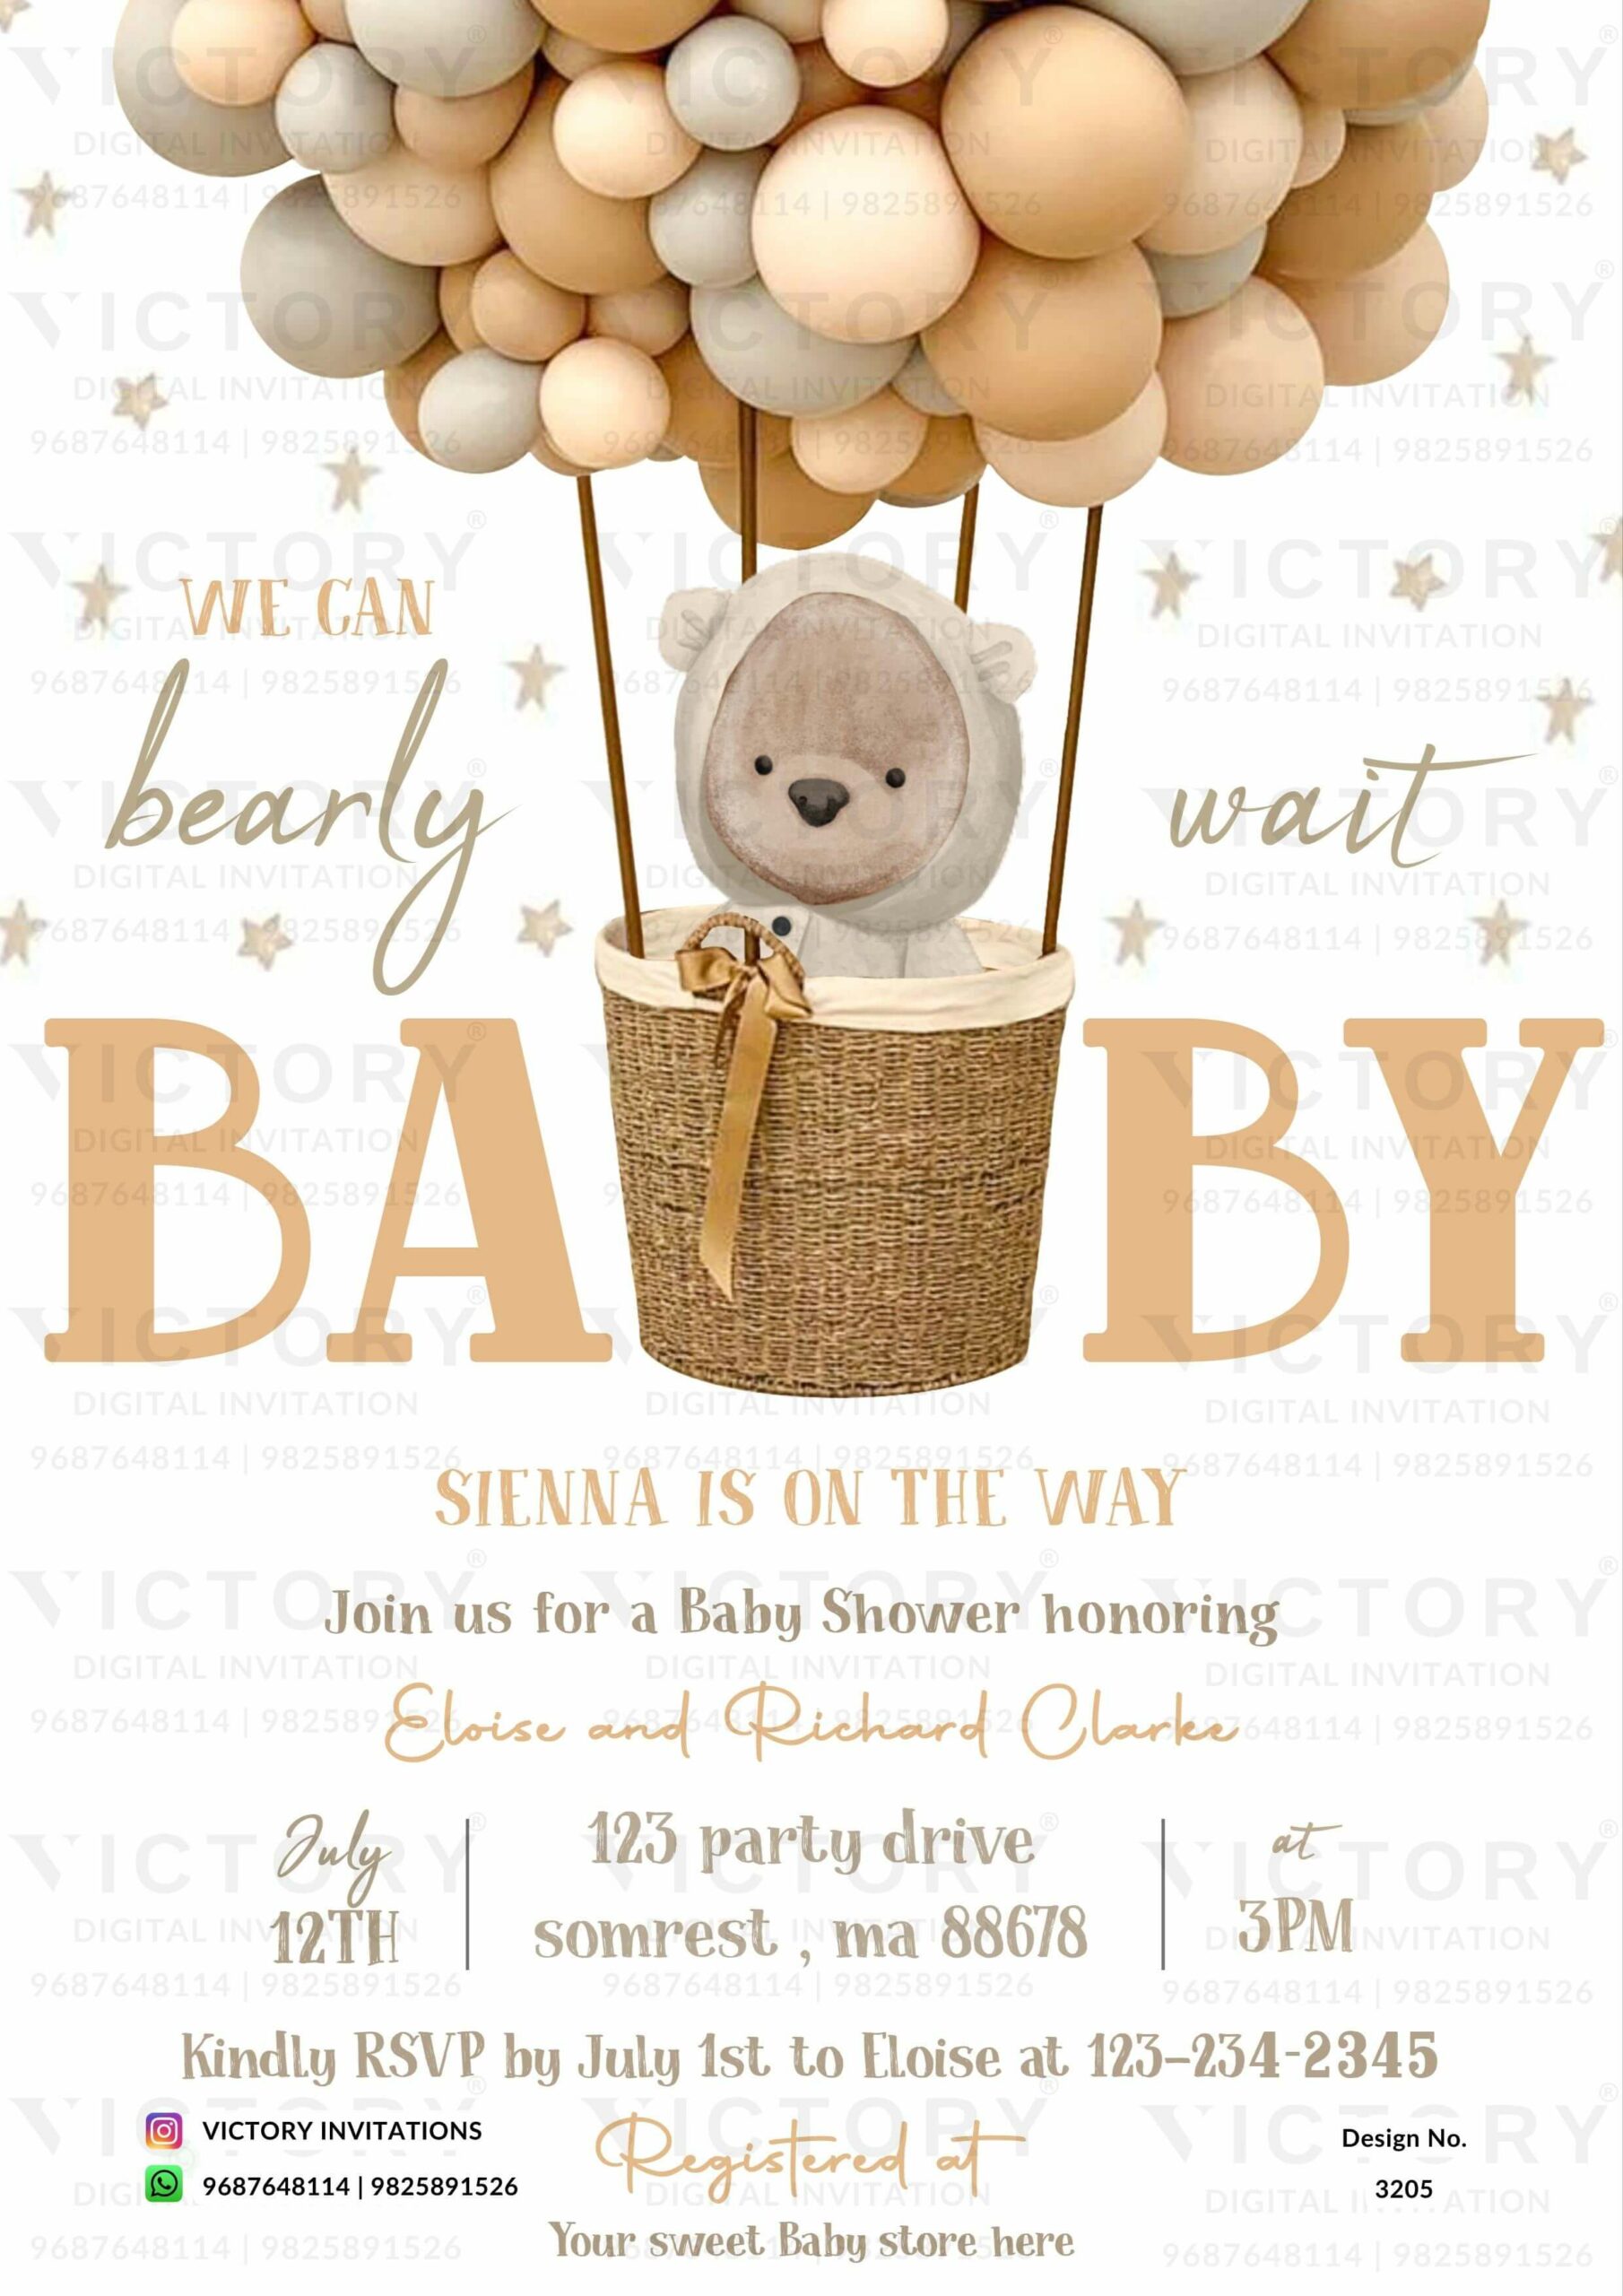 Baby Shower digital invitation card in english design no.3205